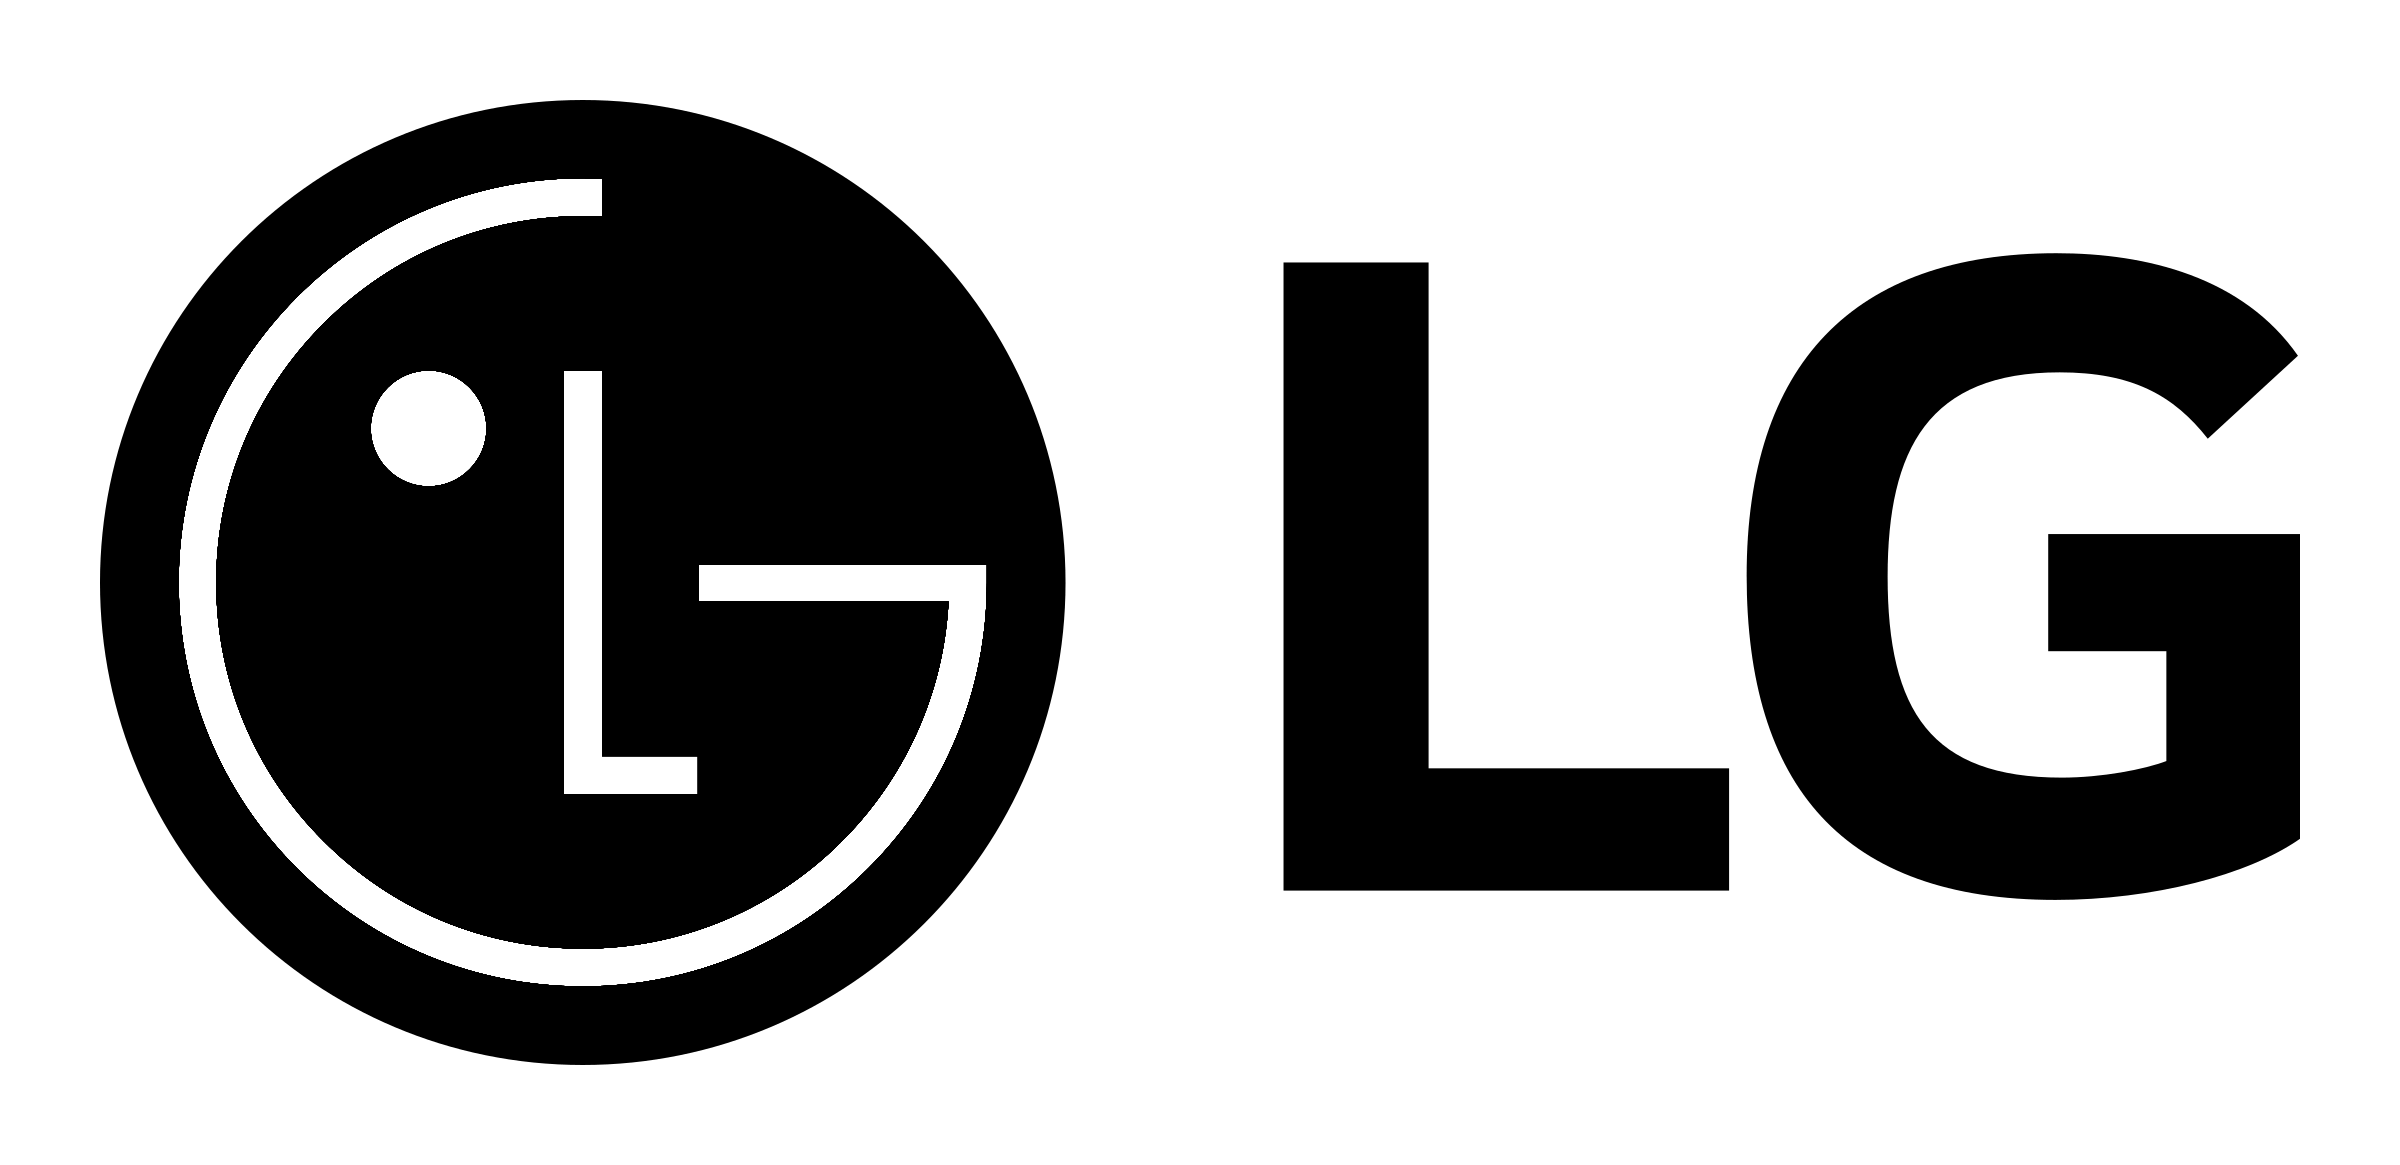 LG Logo - LG Logo PNG Transparent & SVG Vector - Freebie Supply